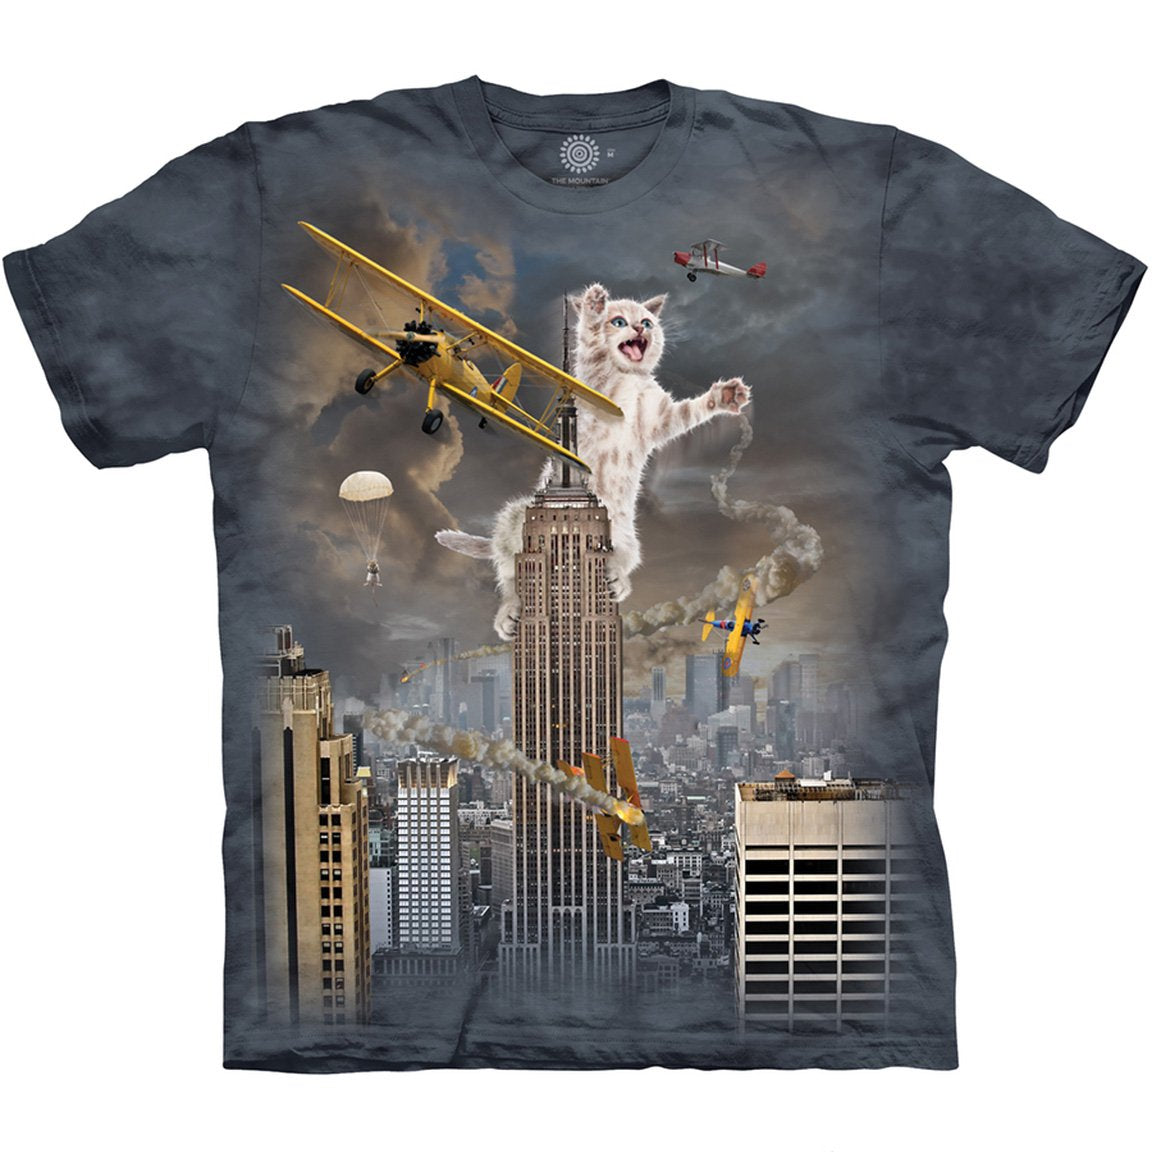 The Mountain King Kitten - T-Shirt